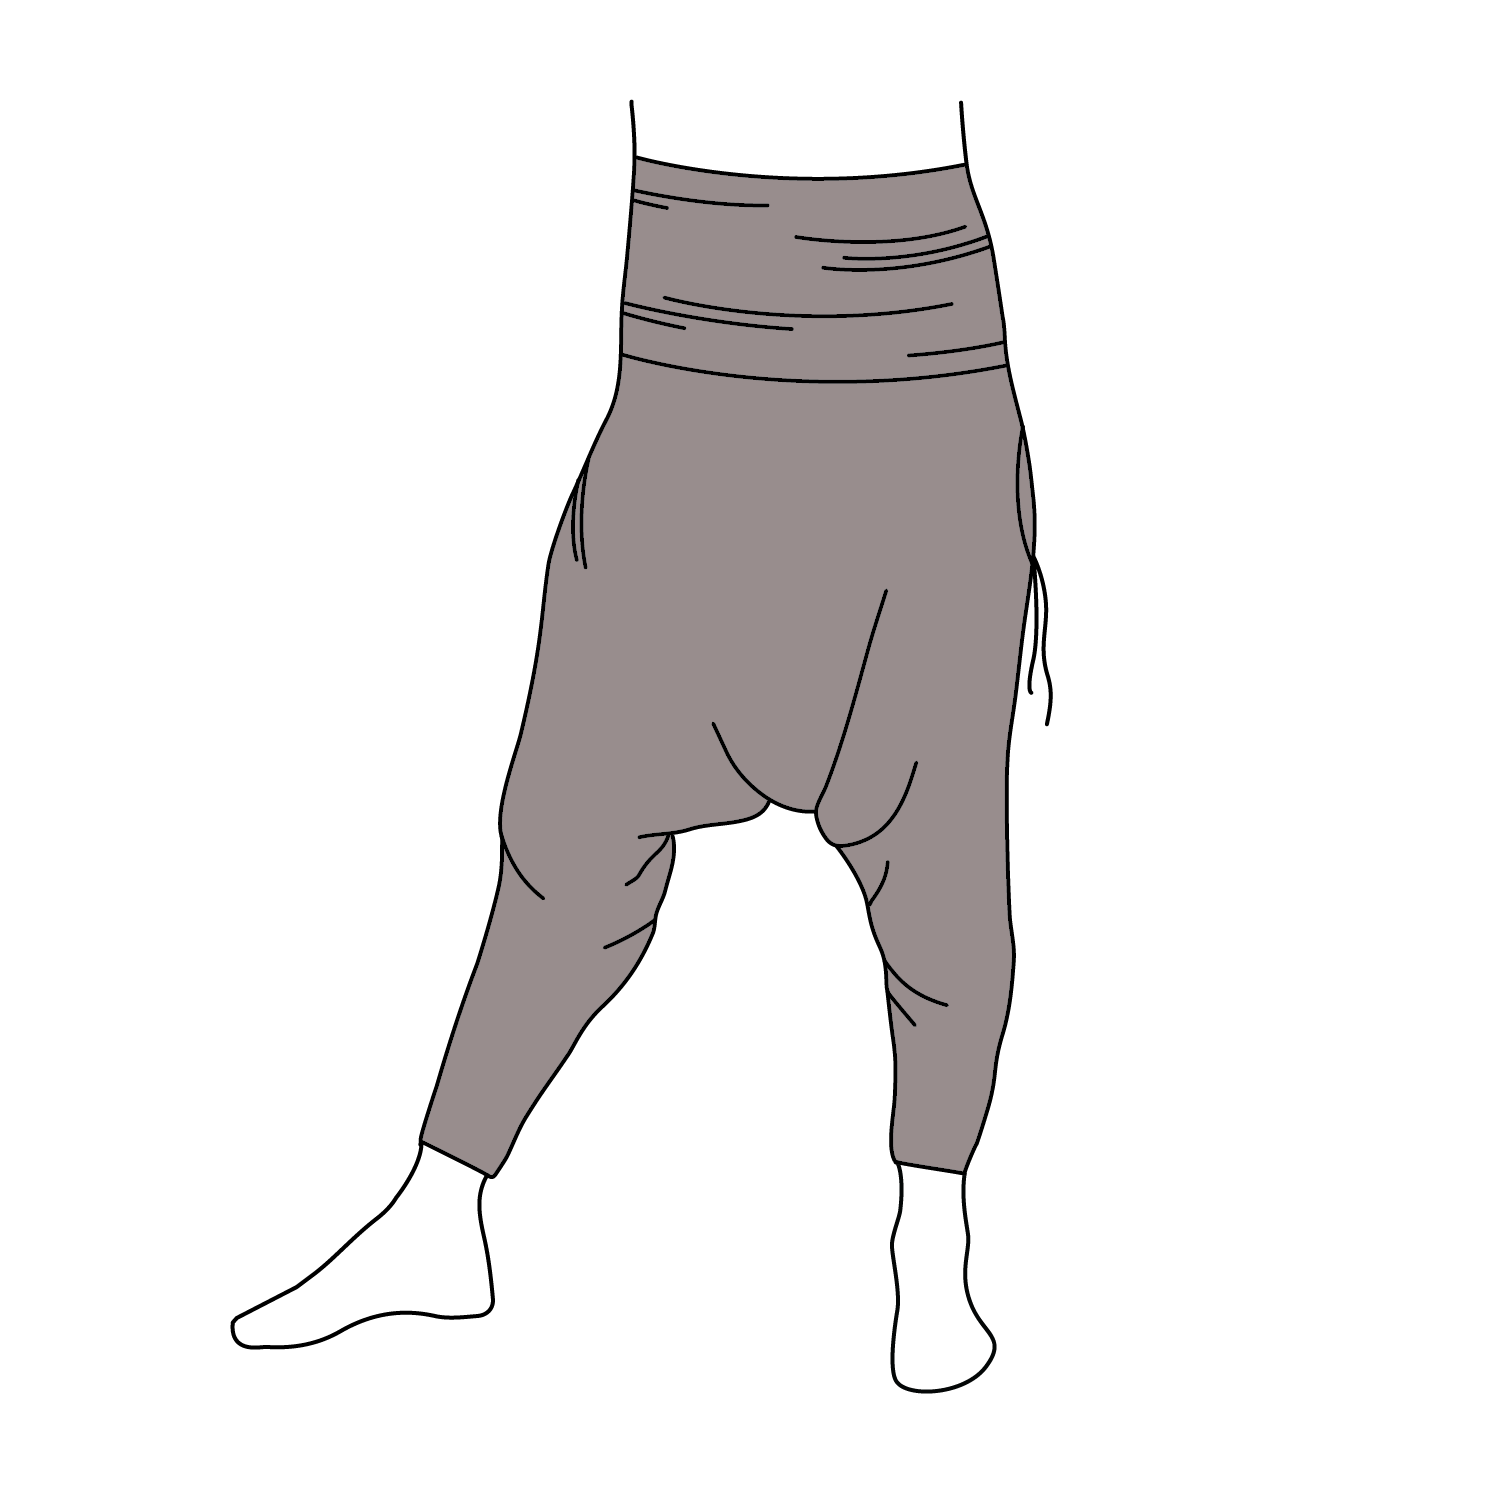 FYOURH Black Yoga Pants Men - Yoga Pants for Men Loose Fit - Harem Pants  for Men - Baggy Pants for Men Elastic Waist Black Medium